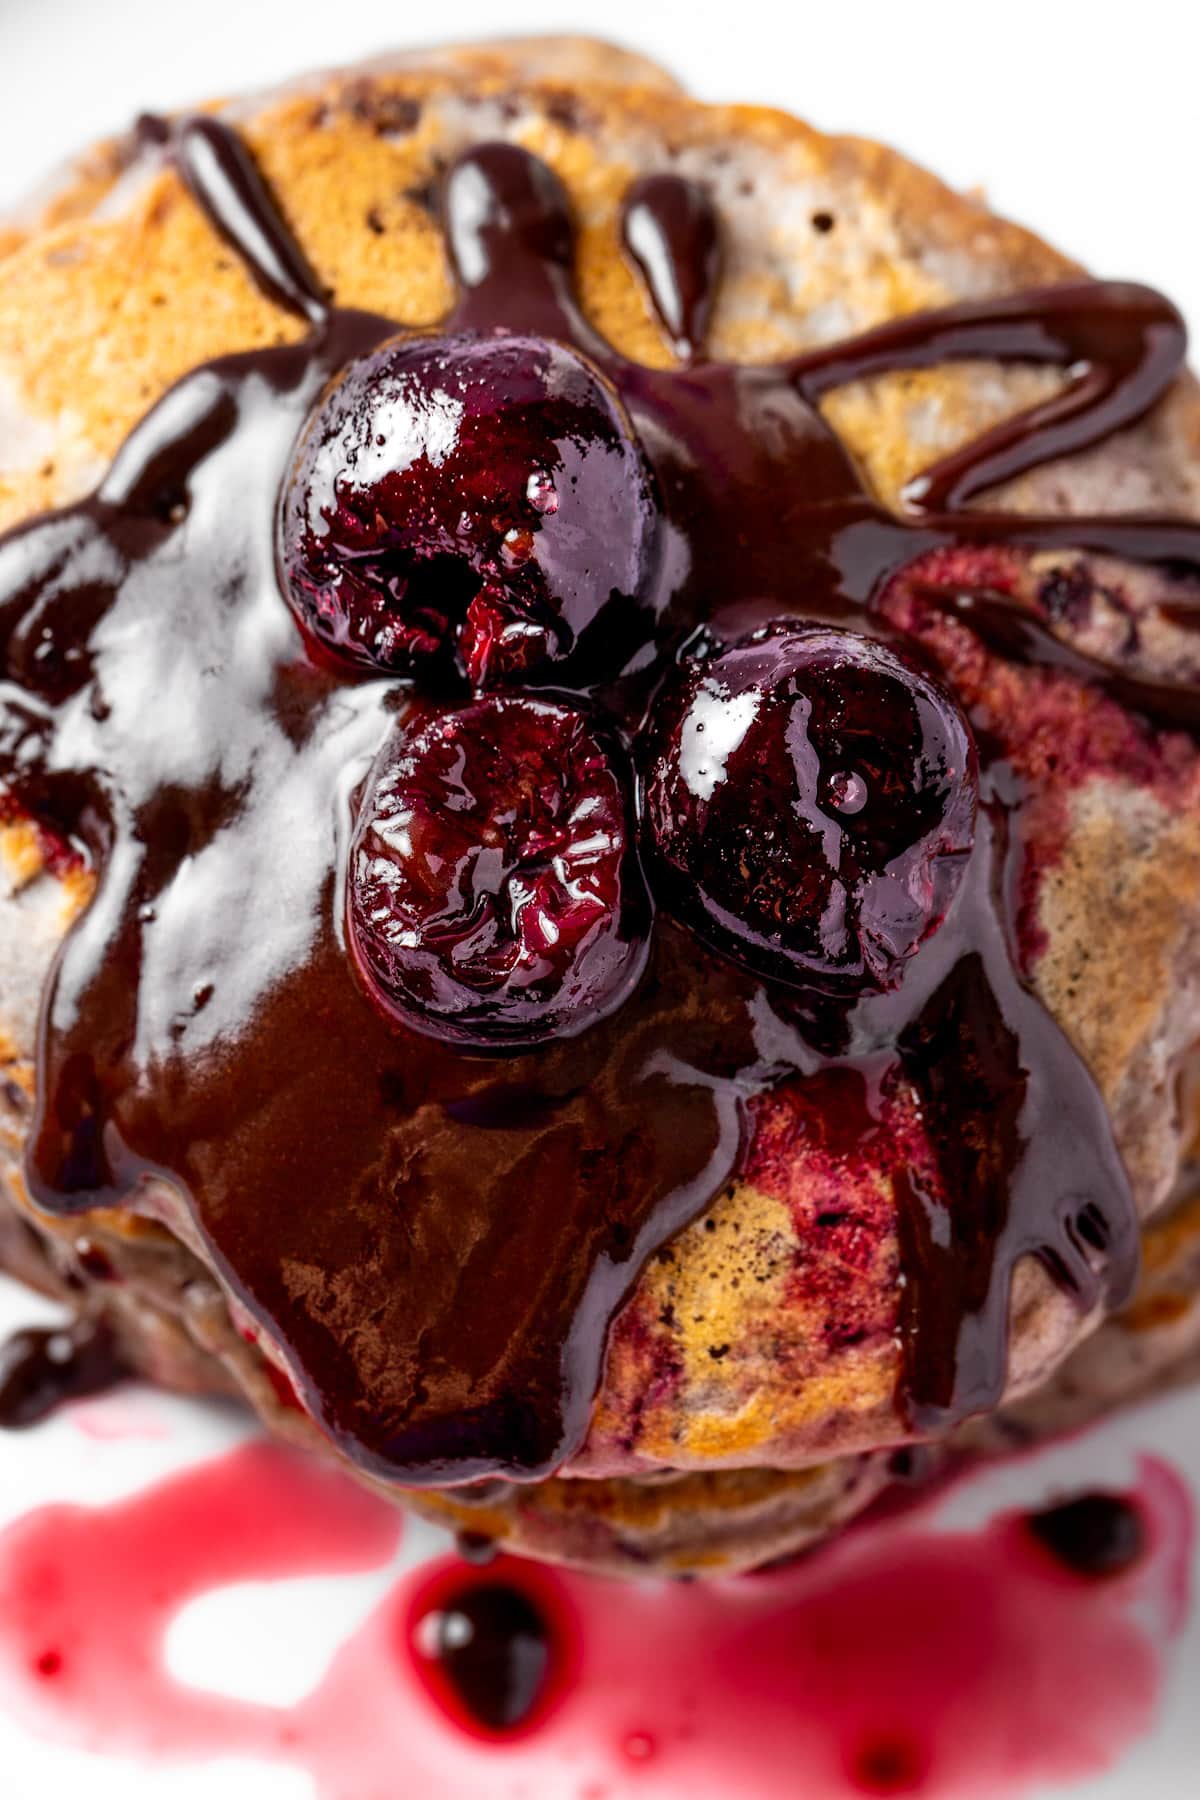 Cherry pancakes topped with chocolate sauce, cherry sauce and three round cherries.